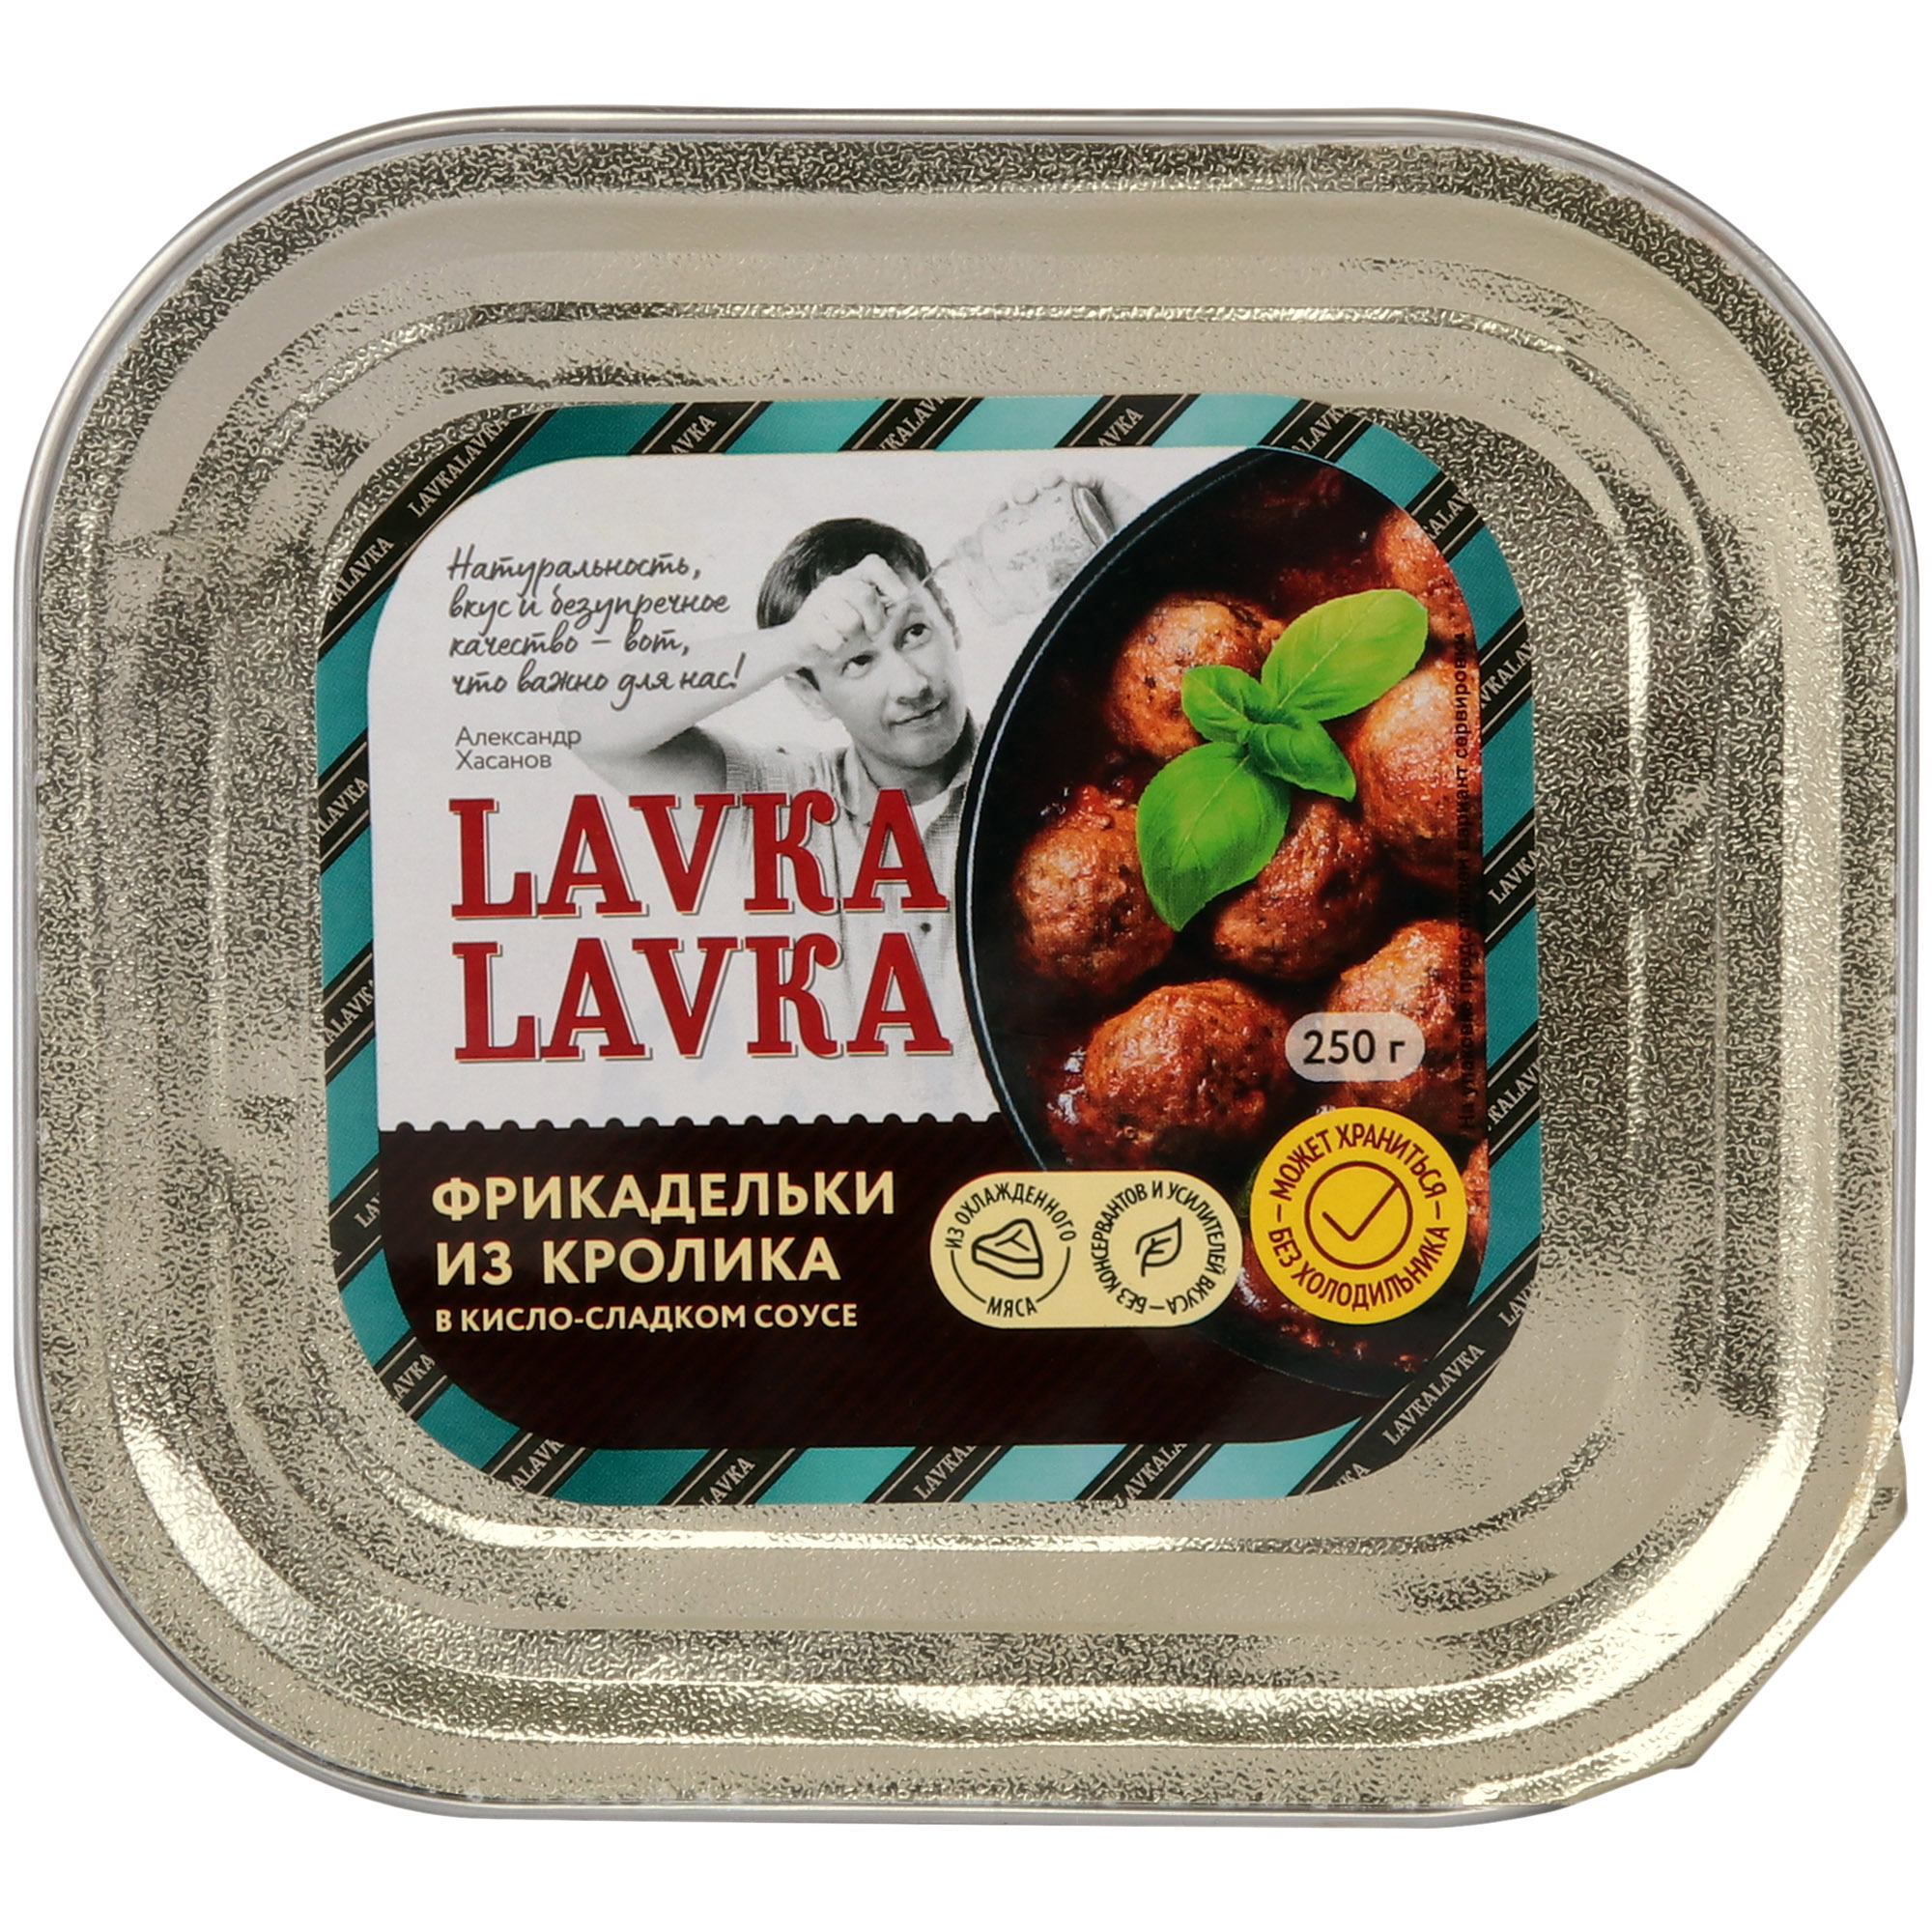 суп lavkalavka солянка 270 г Фрикадельки LavkaLavka из кролика, 250 г